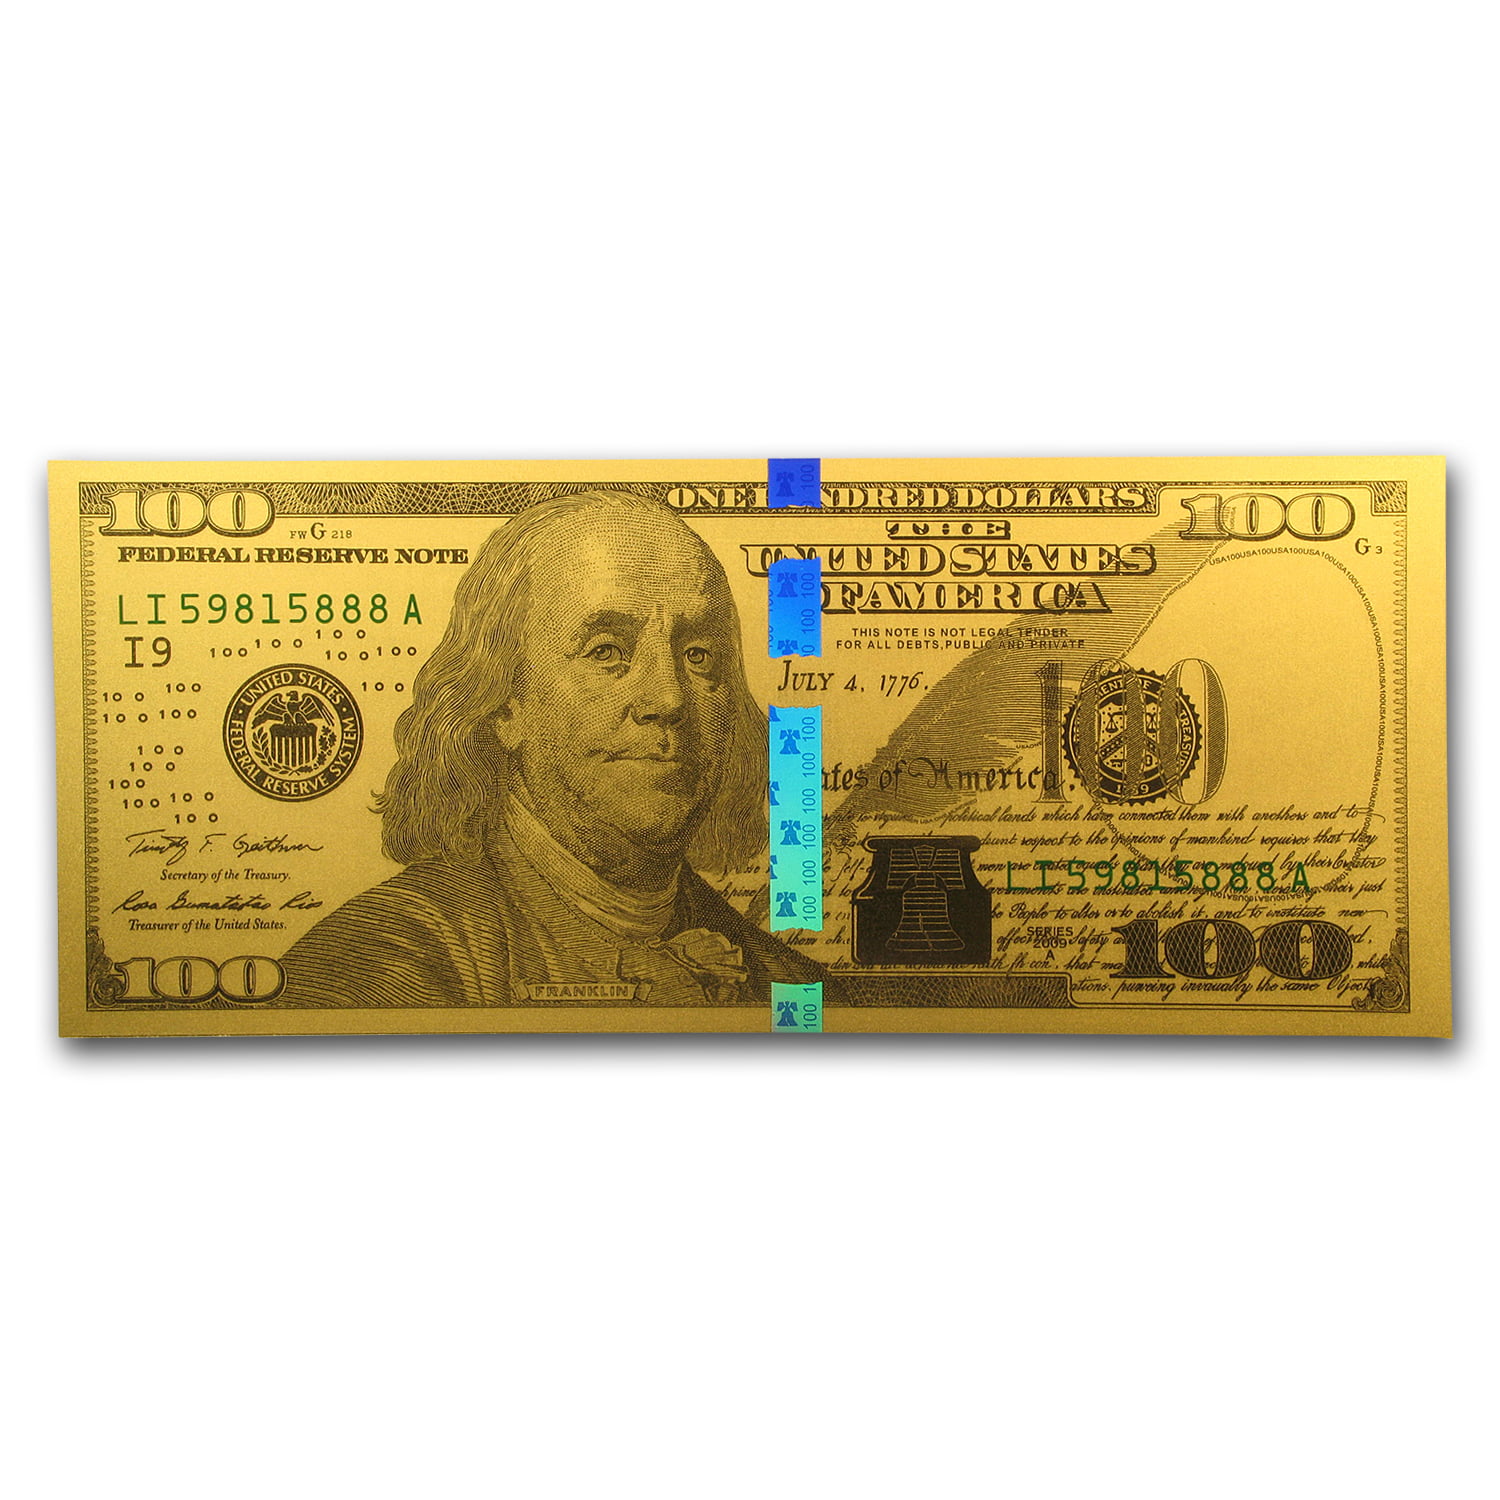 Metal Ring Key Chain Keychain $100 Dollar Bill Benjamin Franklin Us Currency Bling Novelty Logo Symbols 